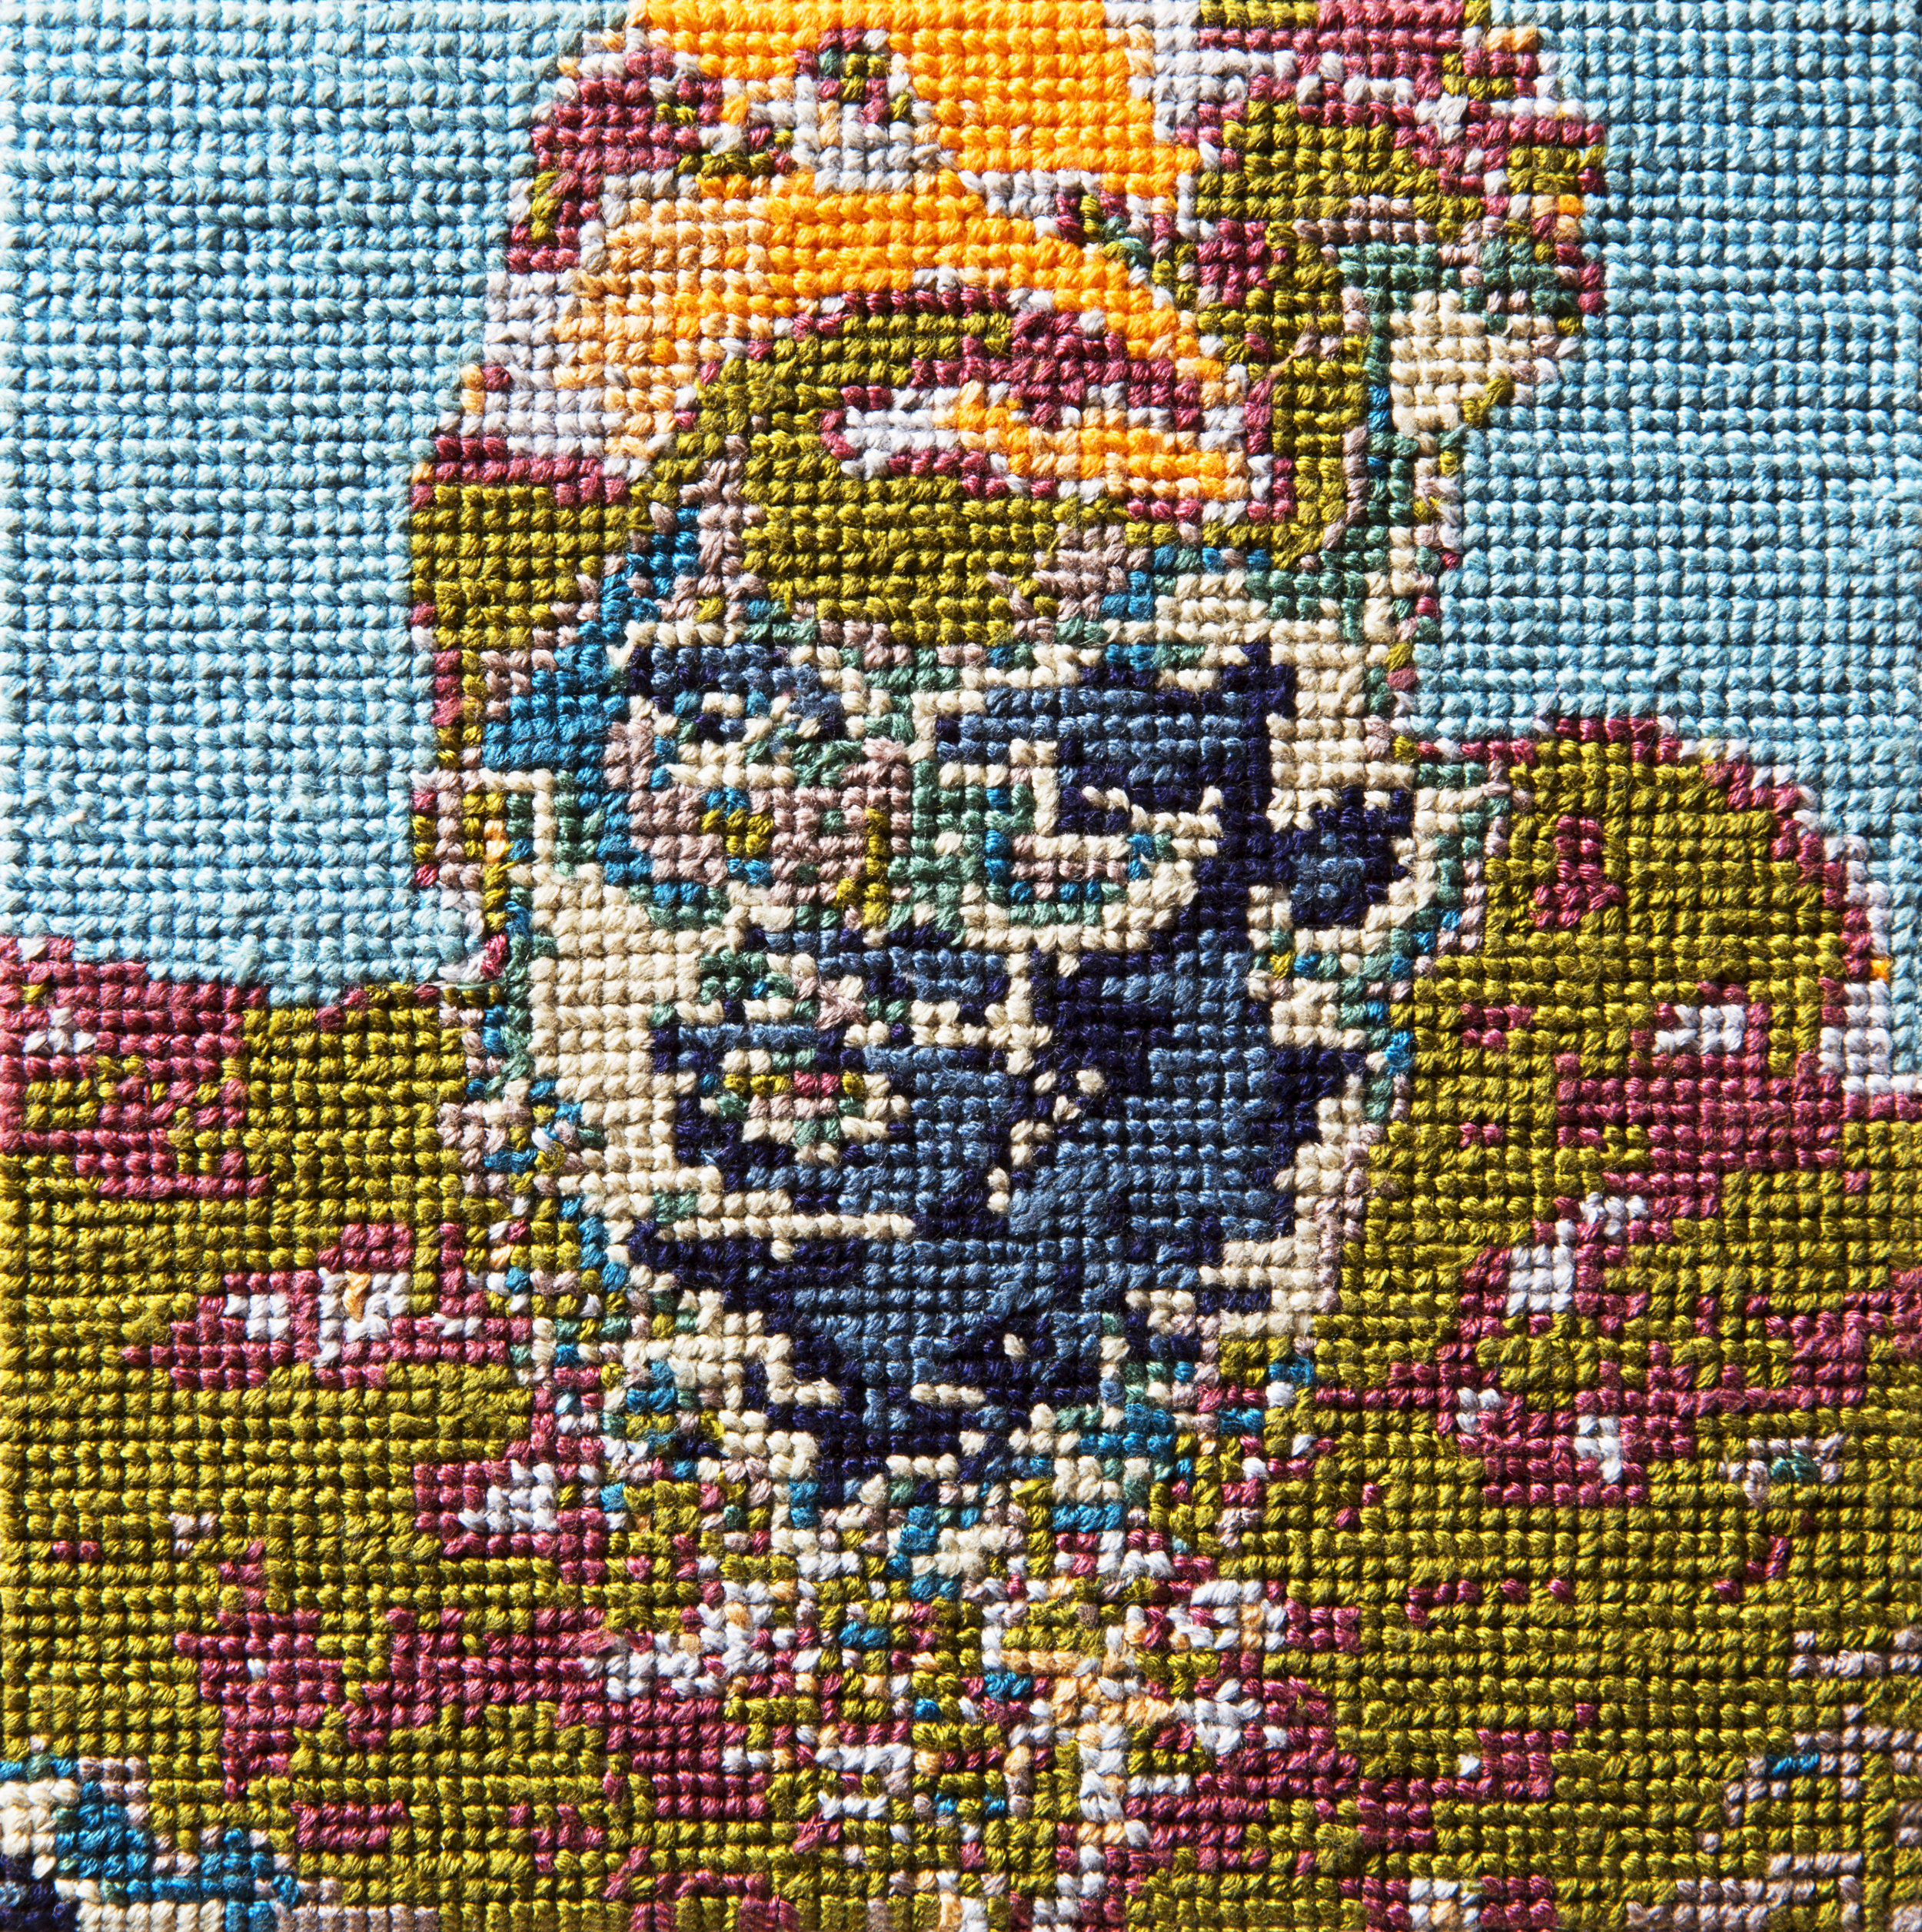   Frame 06   By Christa Tinsley Spaht  5 x 5 inches  Cotton thread on aida cloth  2013 